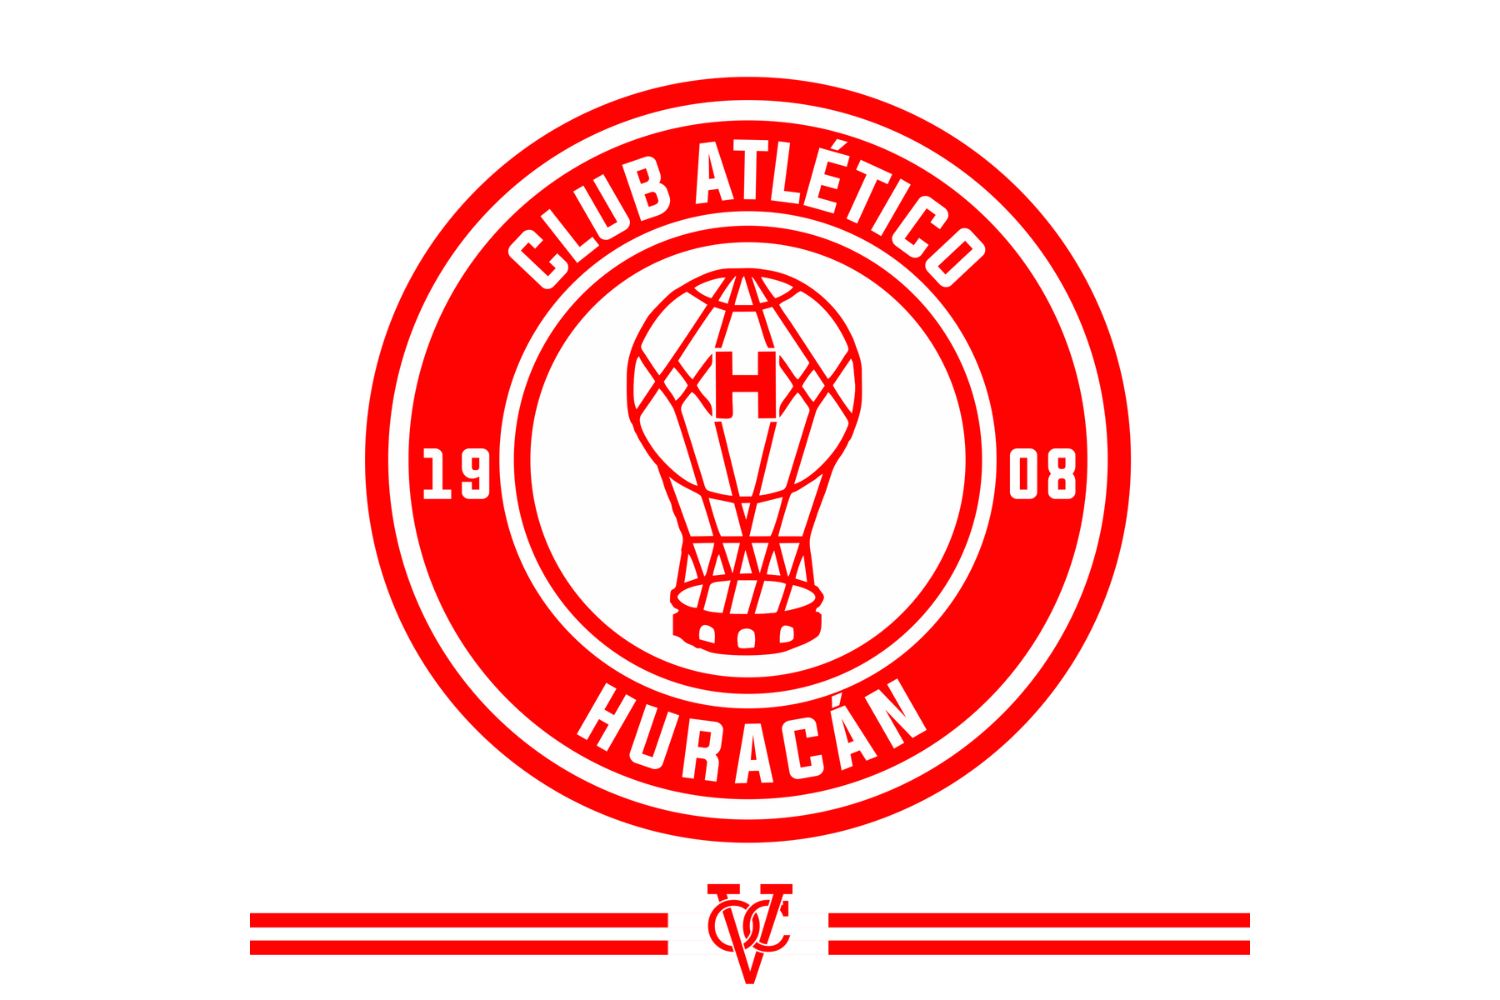 ca-huracan-18-football-club-facts